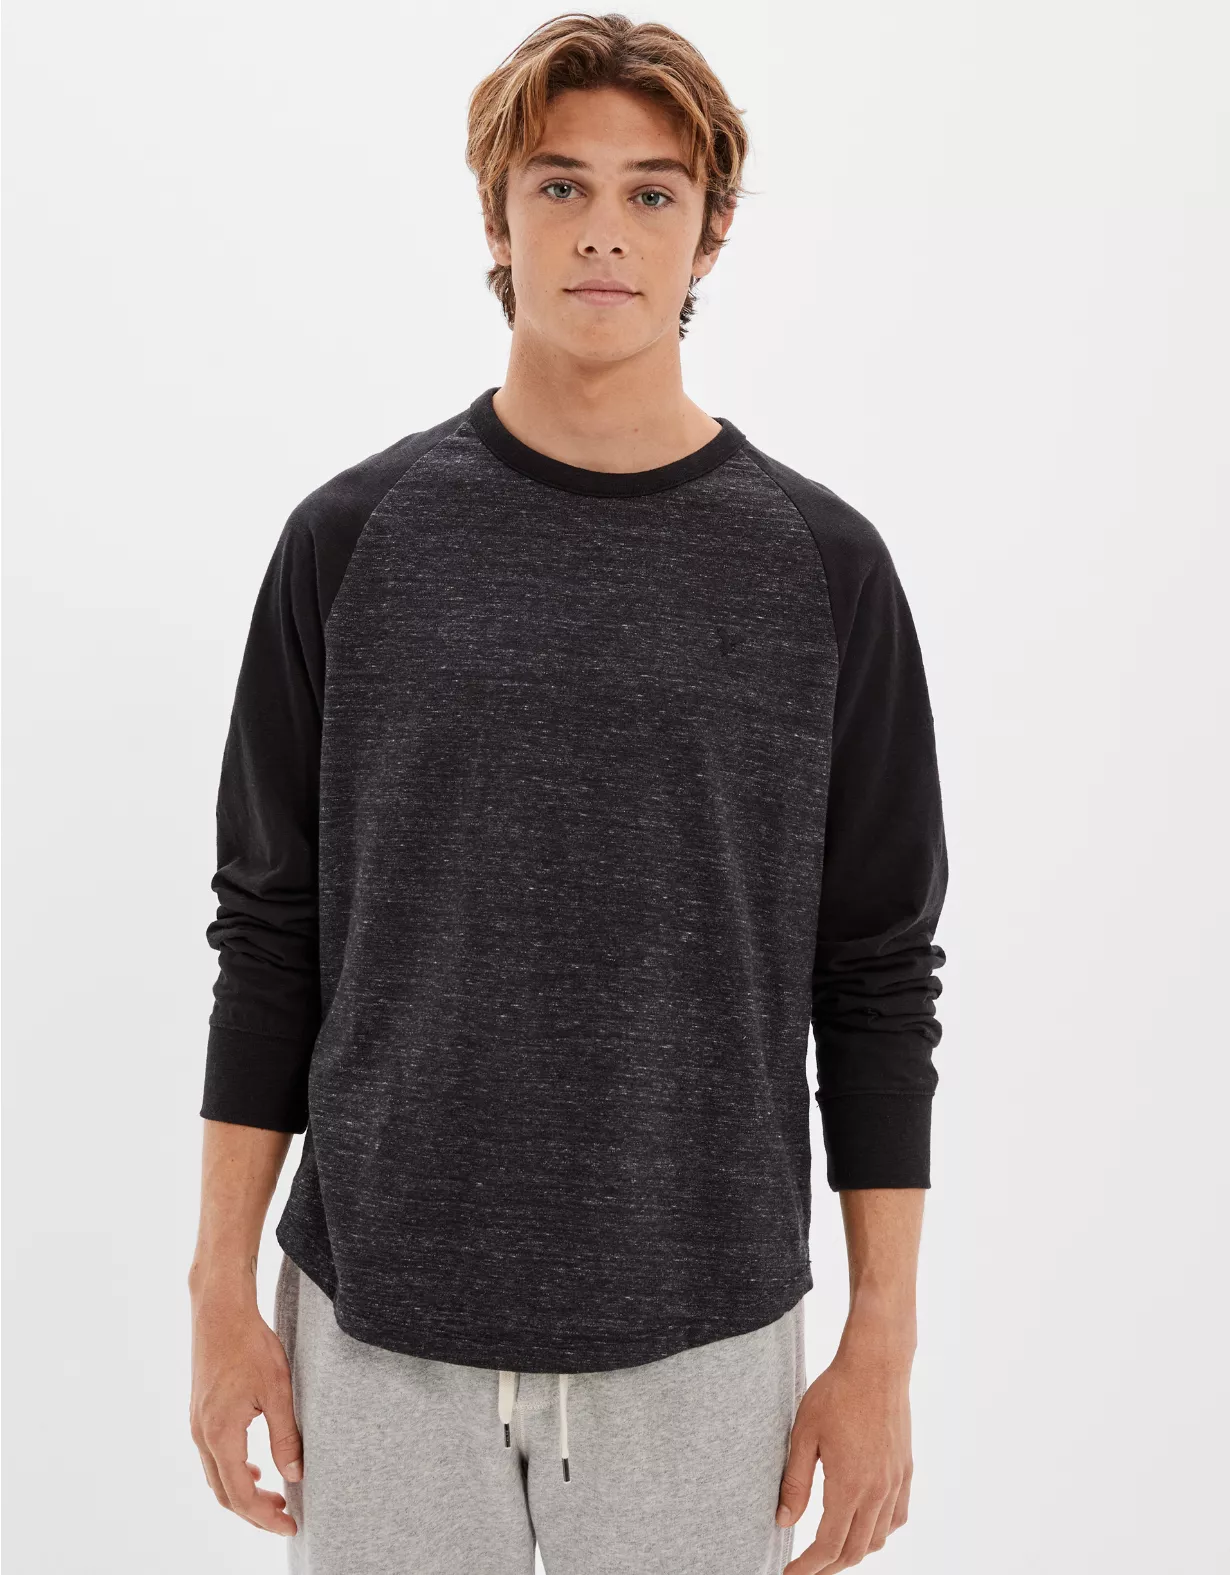 AE Super Soft Raglan Long-Sleeve T-Shirt